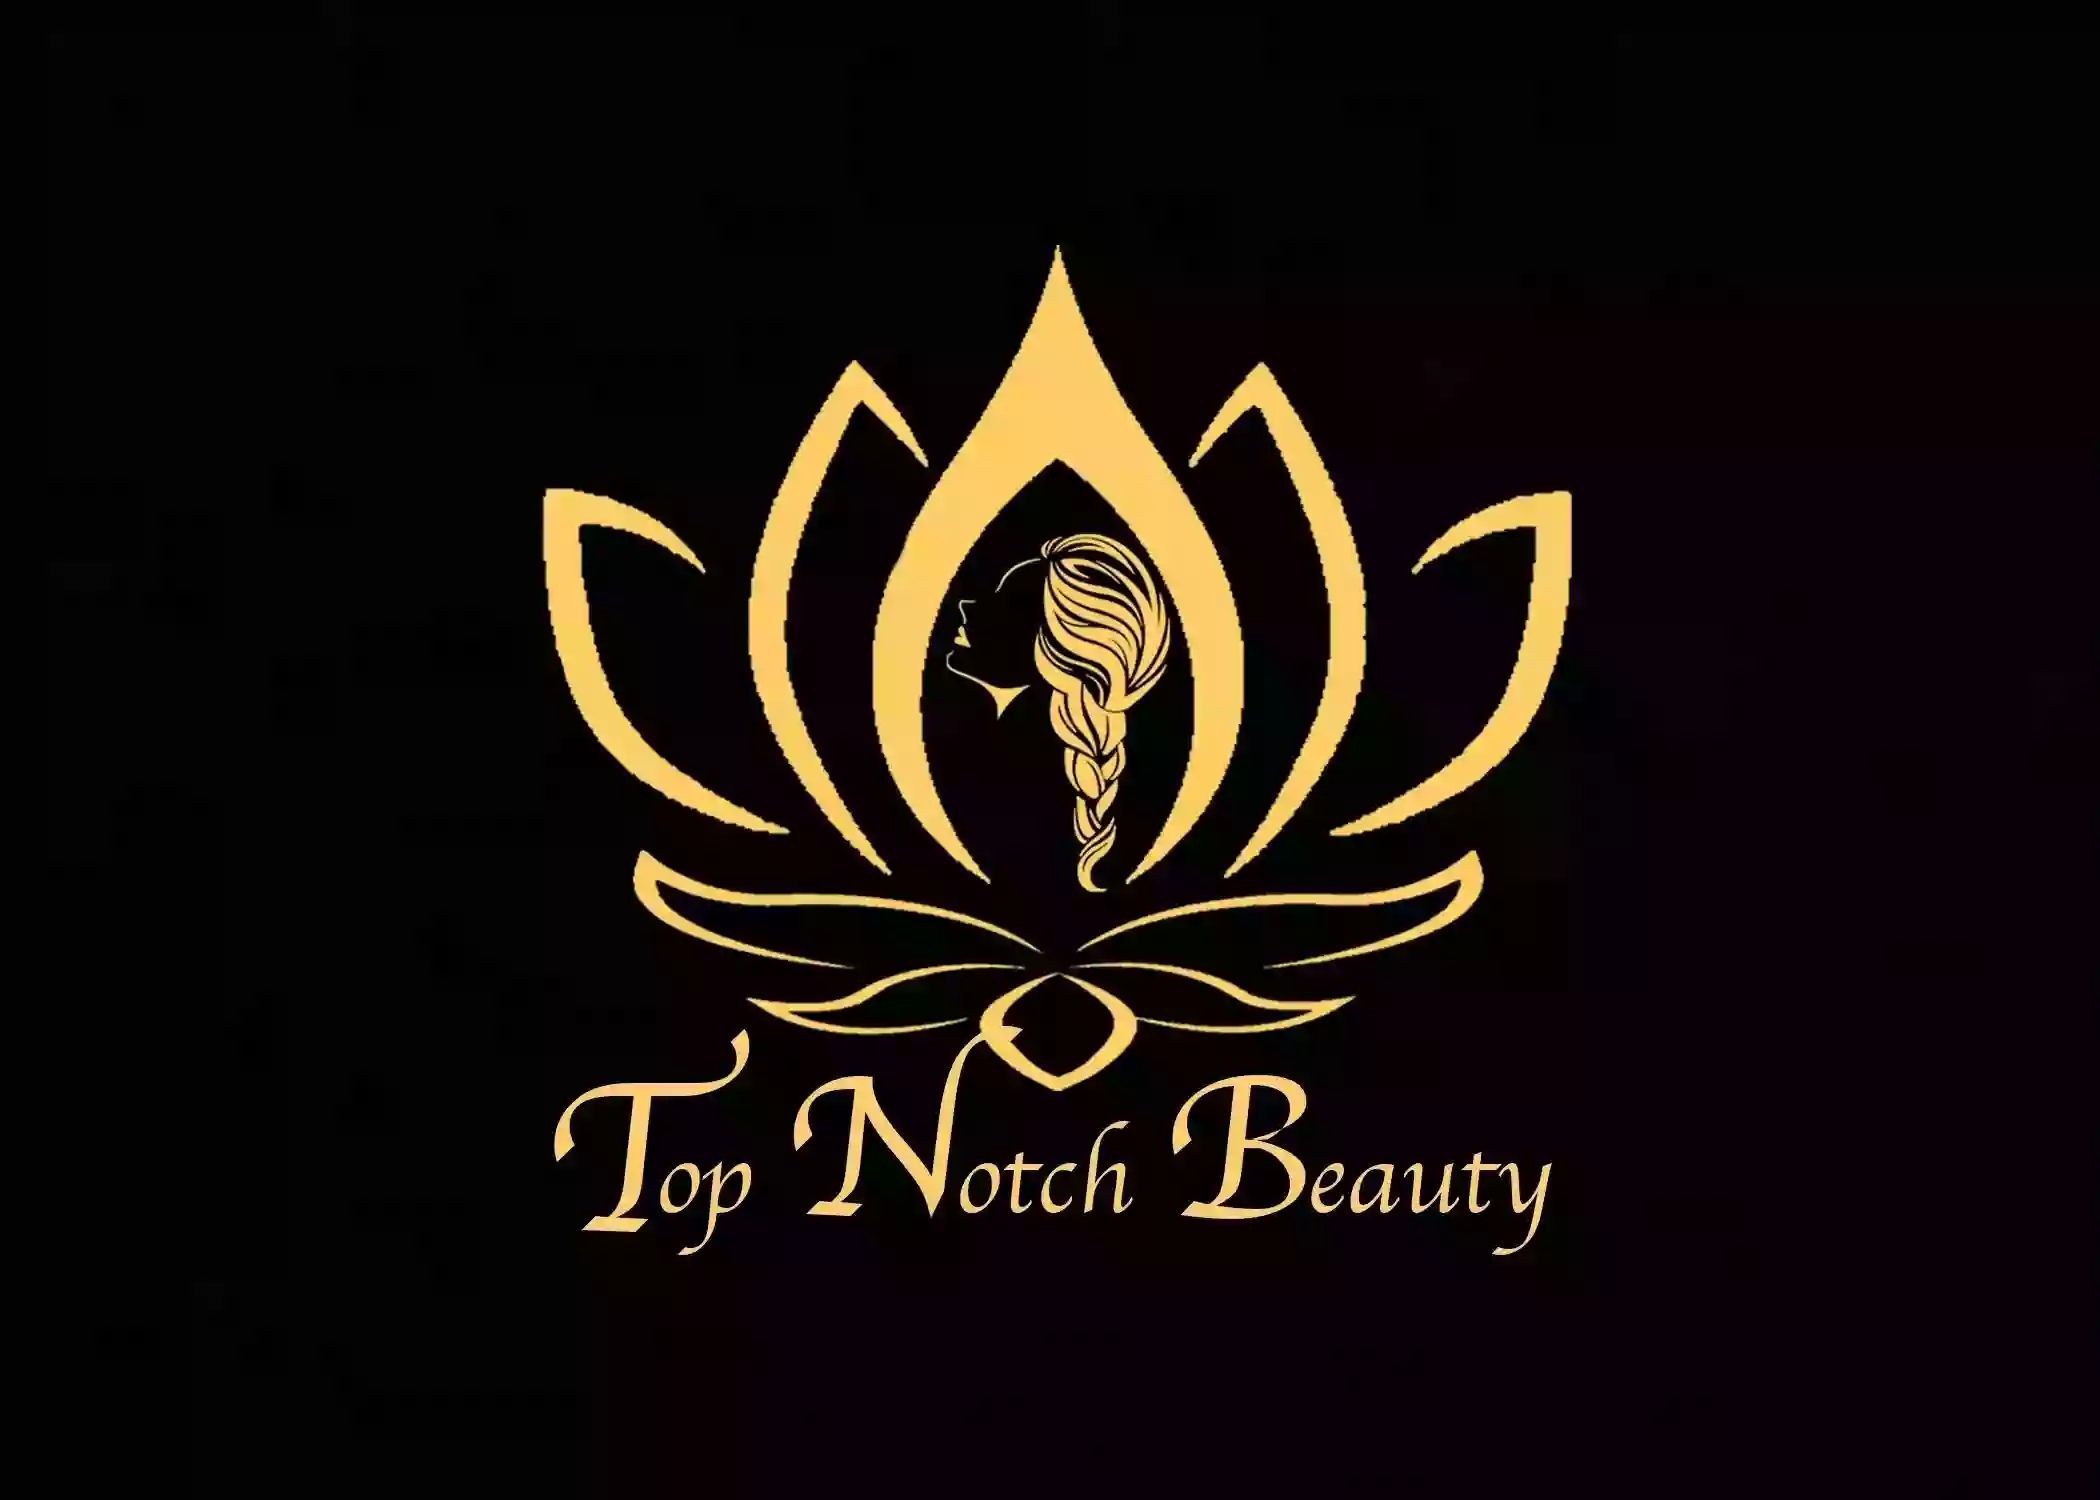 Top Notch Beauty